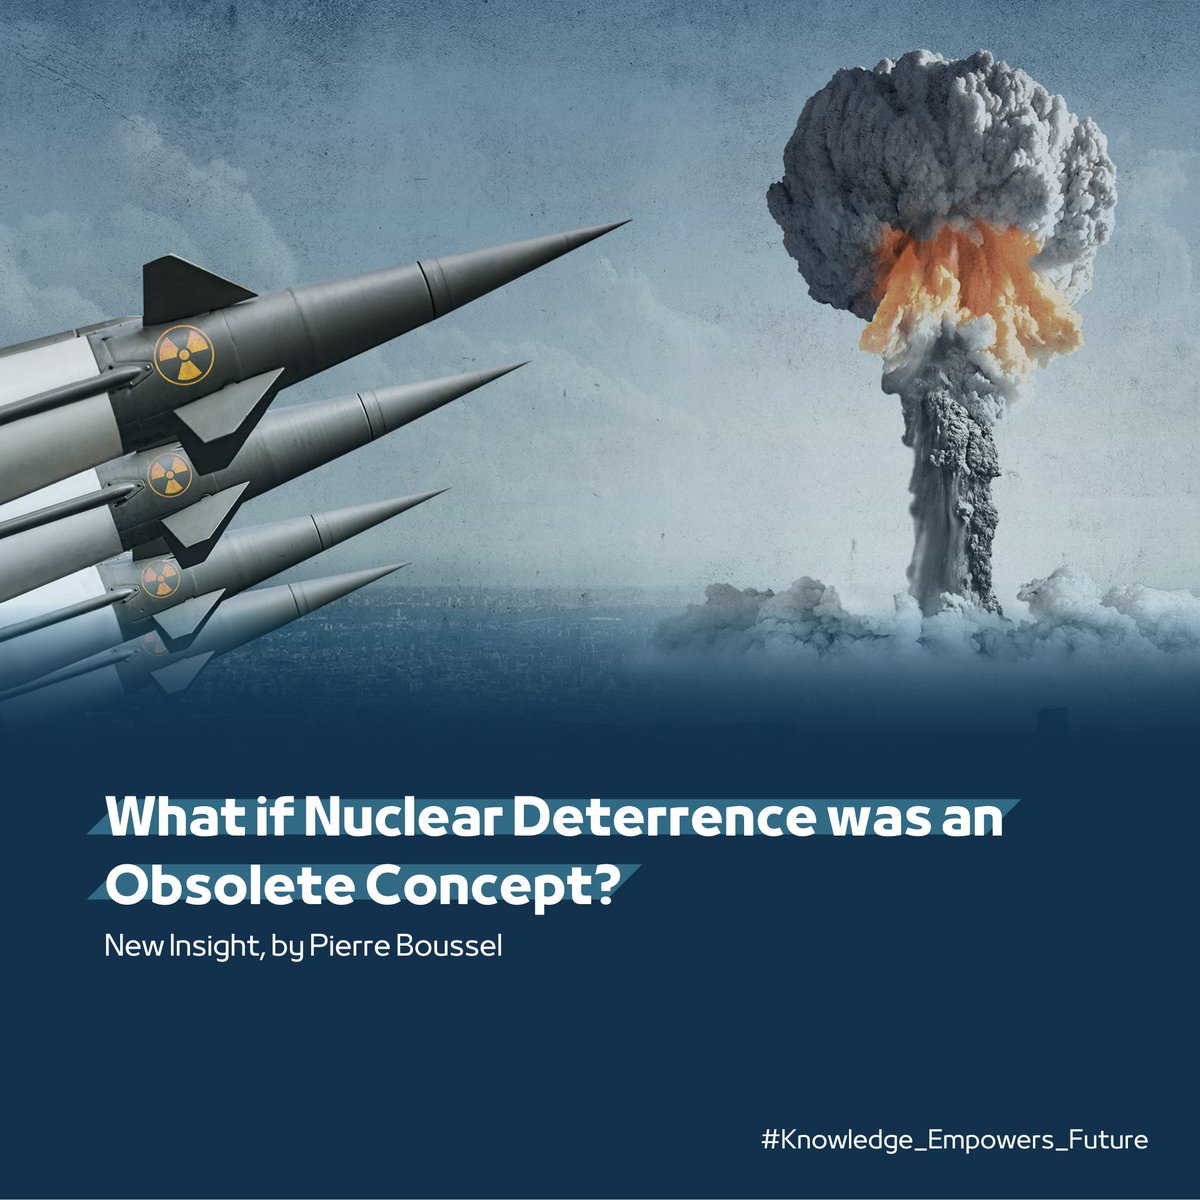 TRENDS has published a new insight entitled 'What if Nuclear Deterrence was an Obsolete Concept?' by Pierre Boussel, Researcher, Associate Fellow at the Fondation pour la Recherche Stratégique (FRS).

bit.ly/3POrIj7

#TRENDS #NuclearDeterrence #Global #StrategicStudies